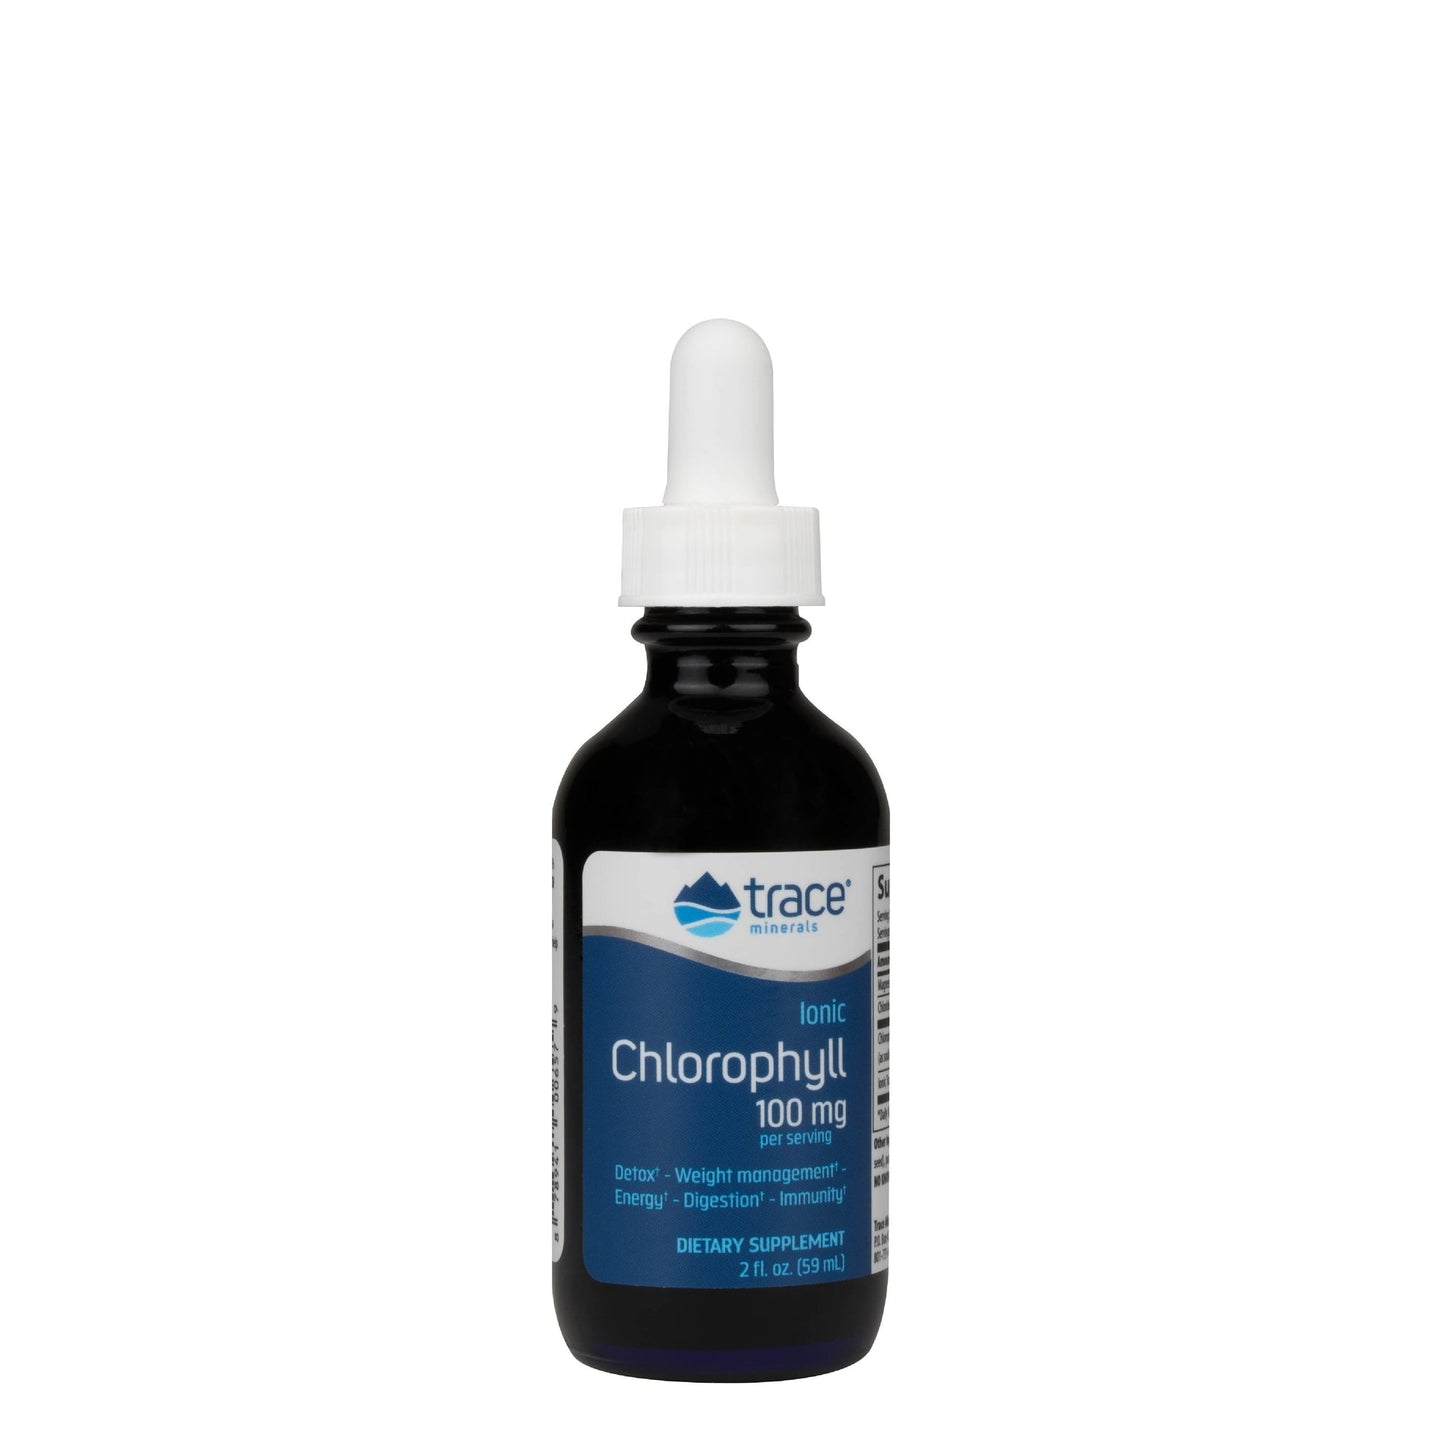 Ionic Chlorophyll - 100 mg